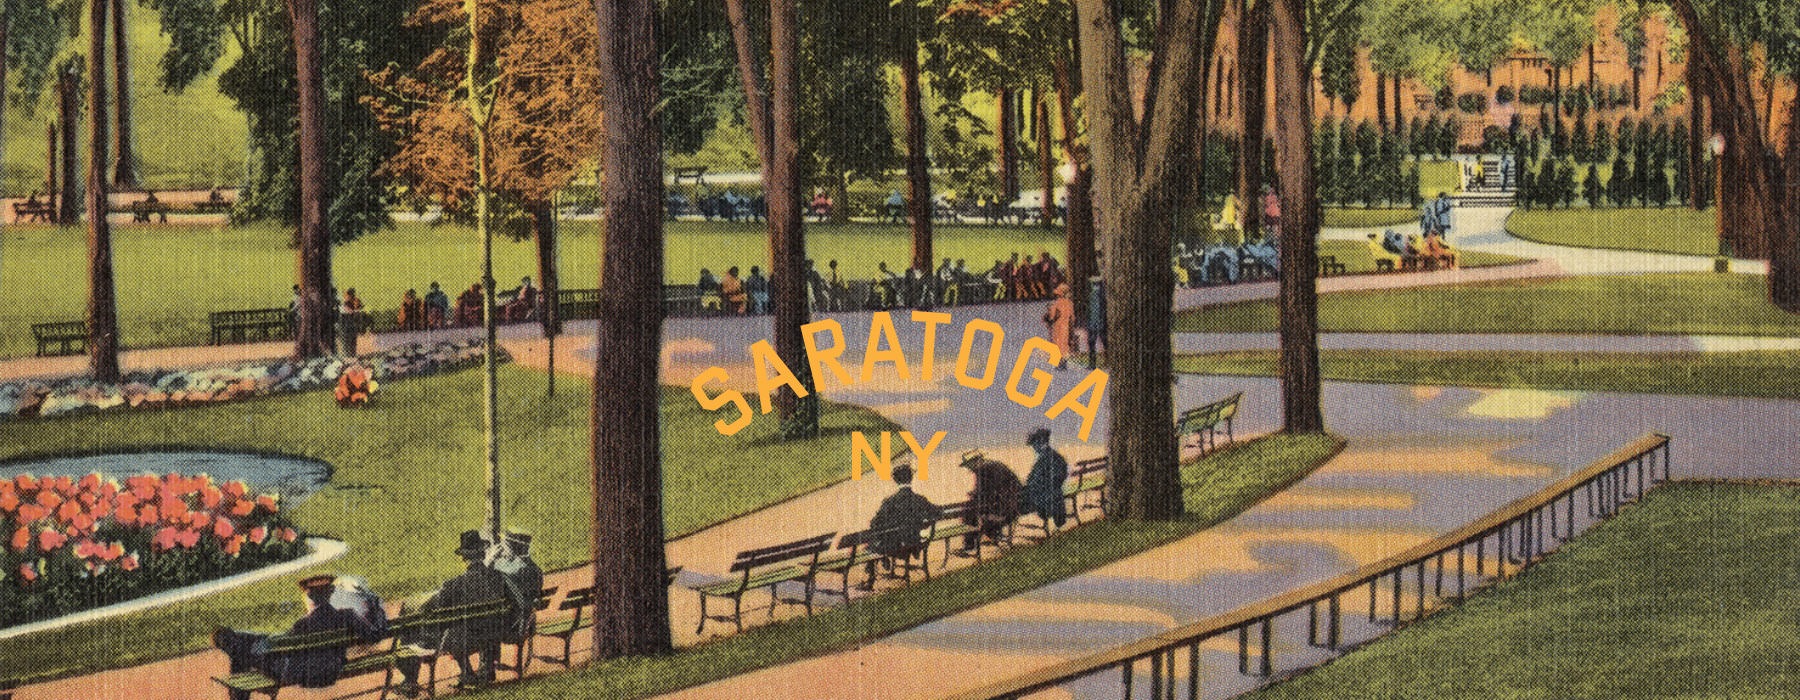 City park, Saratoga Spa, N.Y. ©Boston Public Library